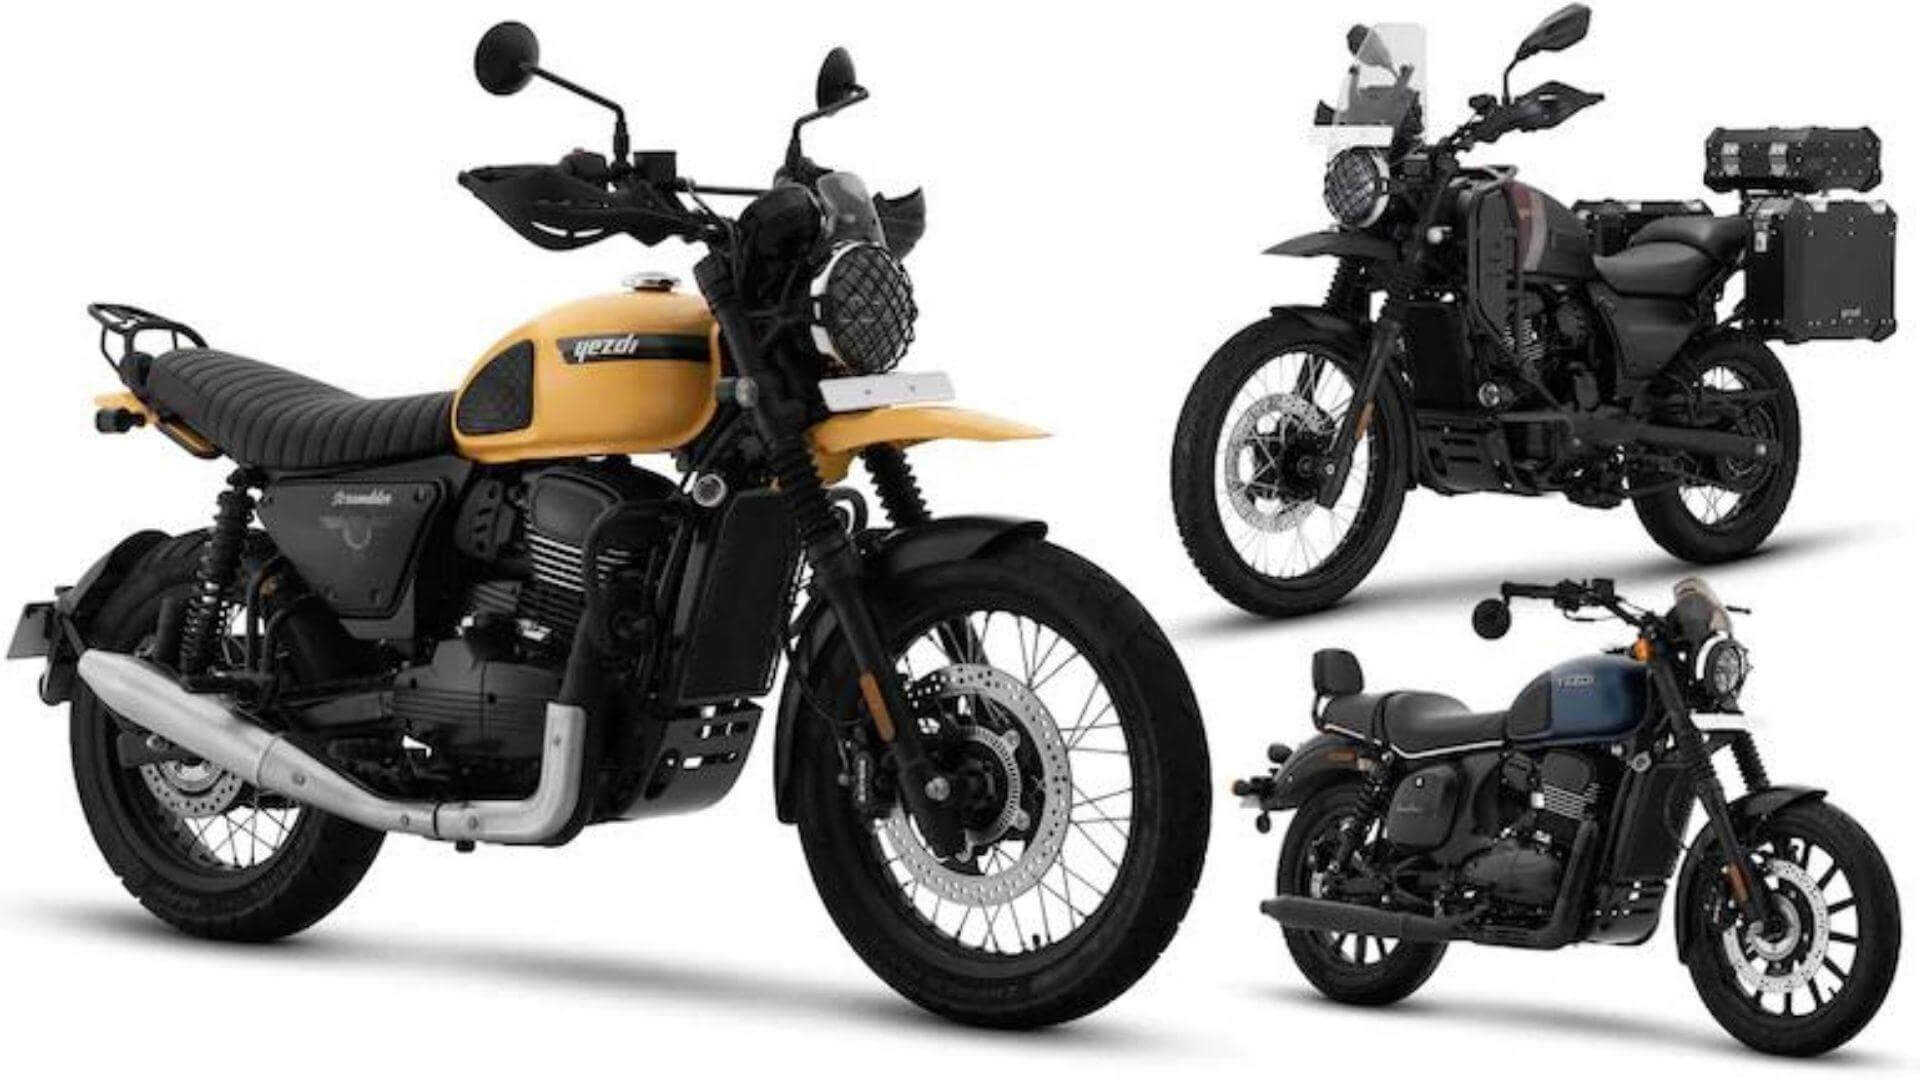 Legendary Motorcycle Brand Yezdi Comeback To Indian Market